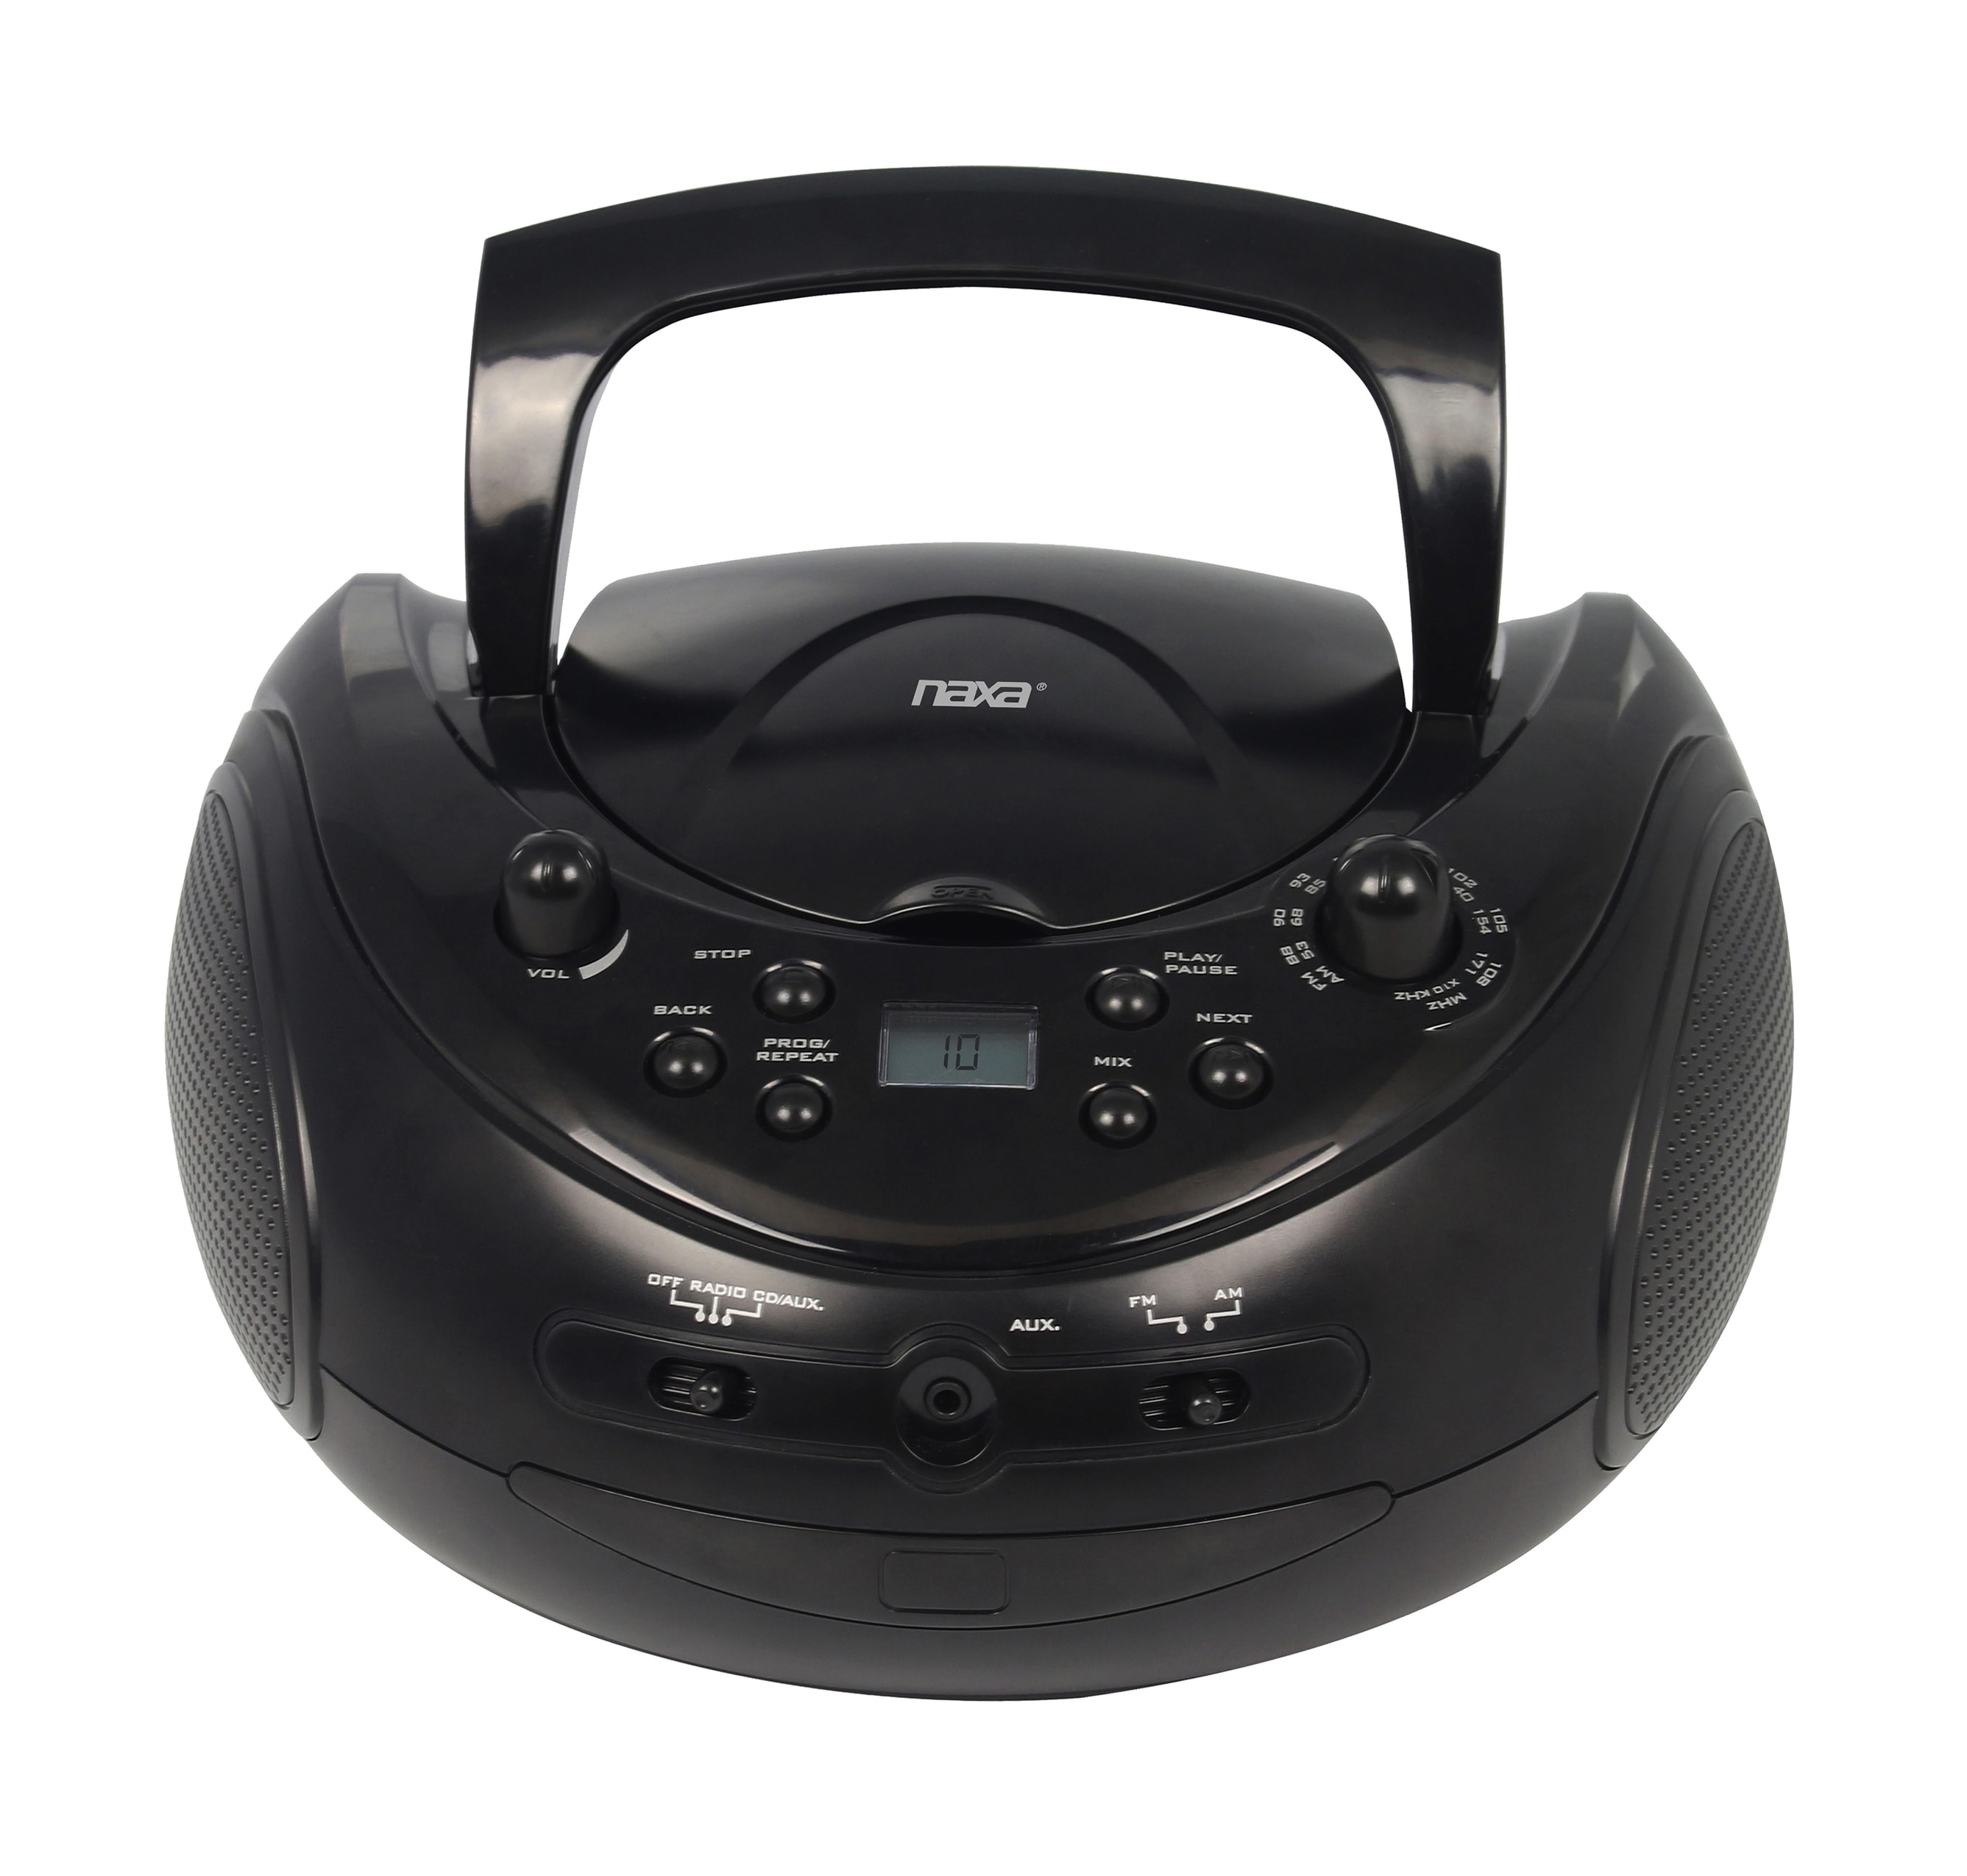 Naxa Portable CD Radio Player, Boombox, Analog Display, AM/FM 